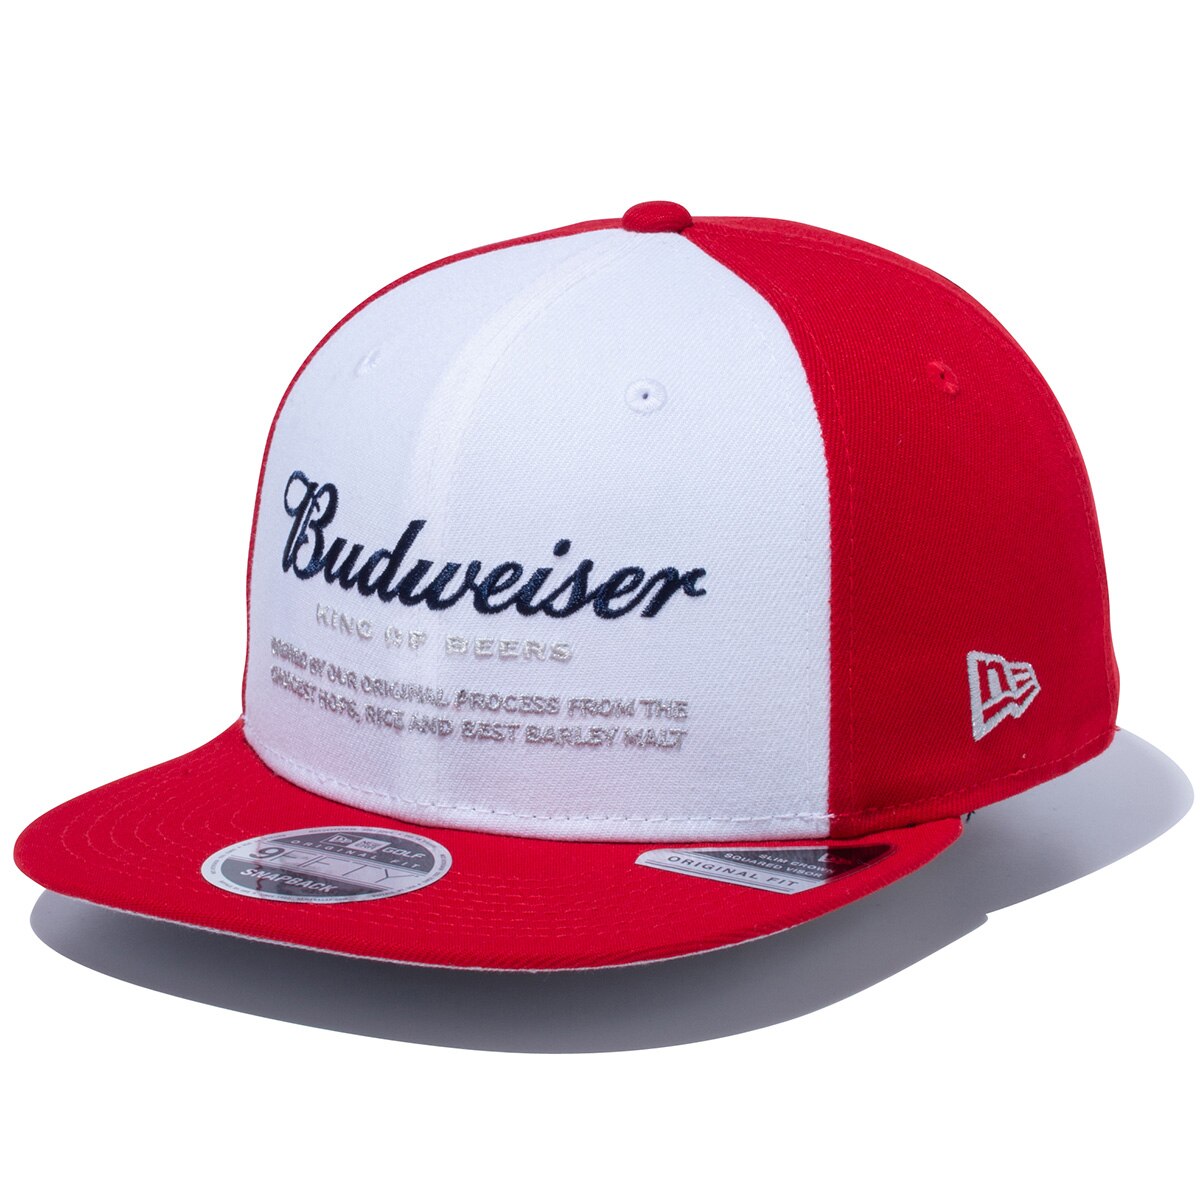 Budweiser(バドワイザー) メンズ 帽子 キャップ - キャップ